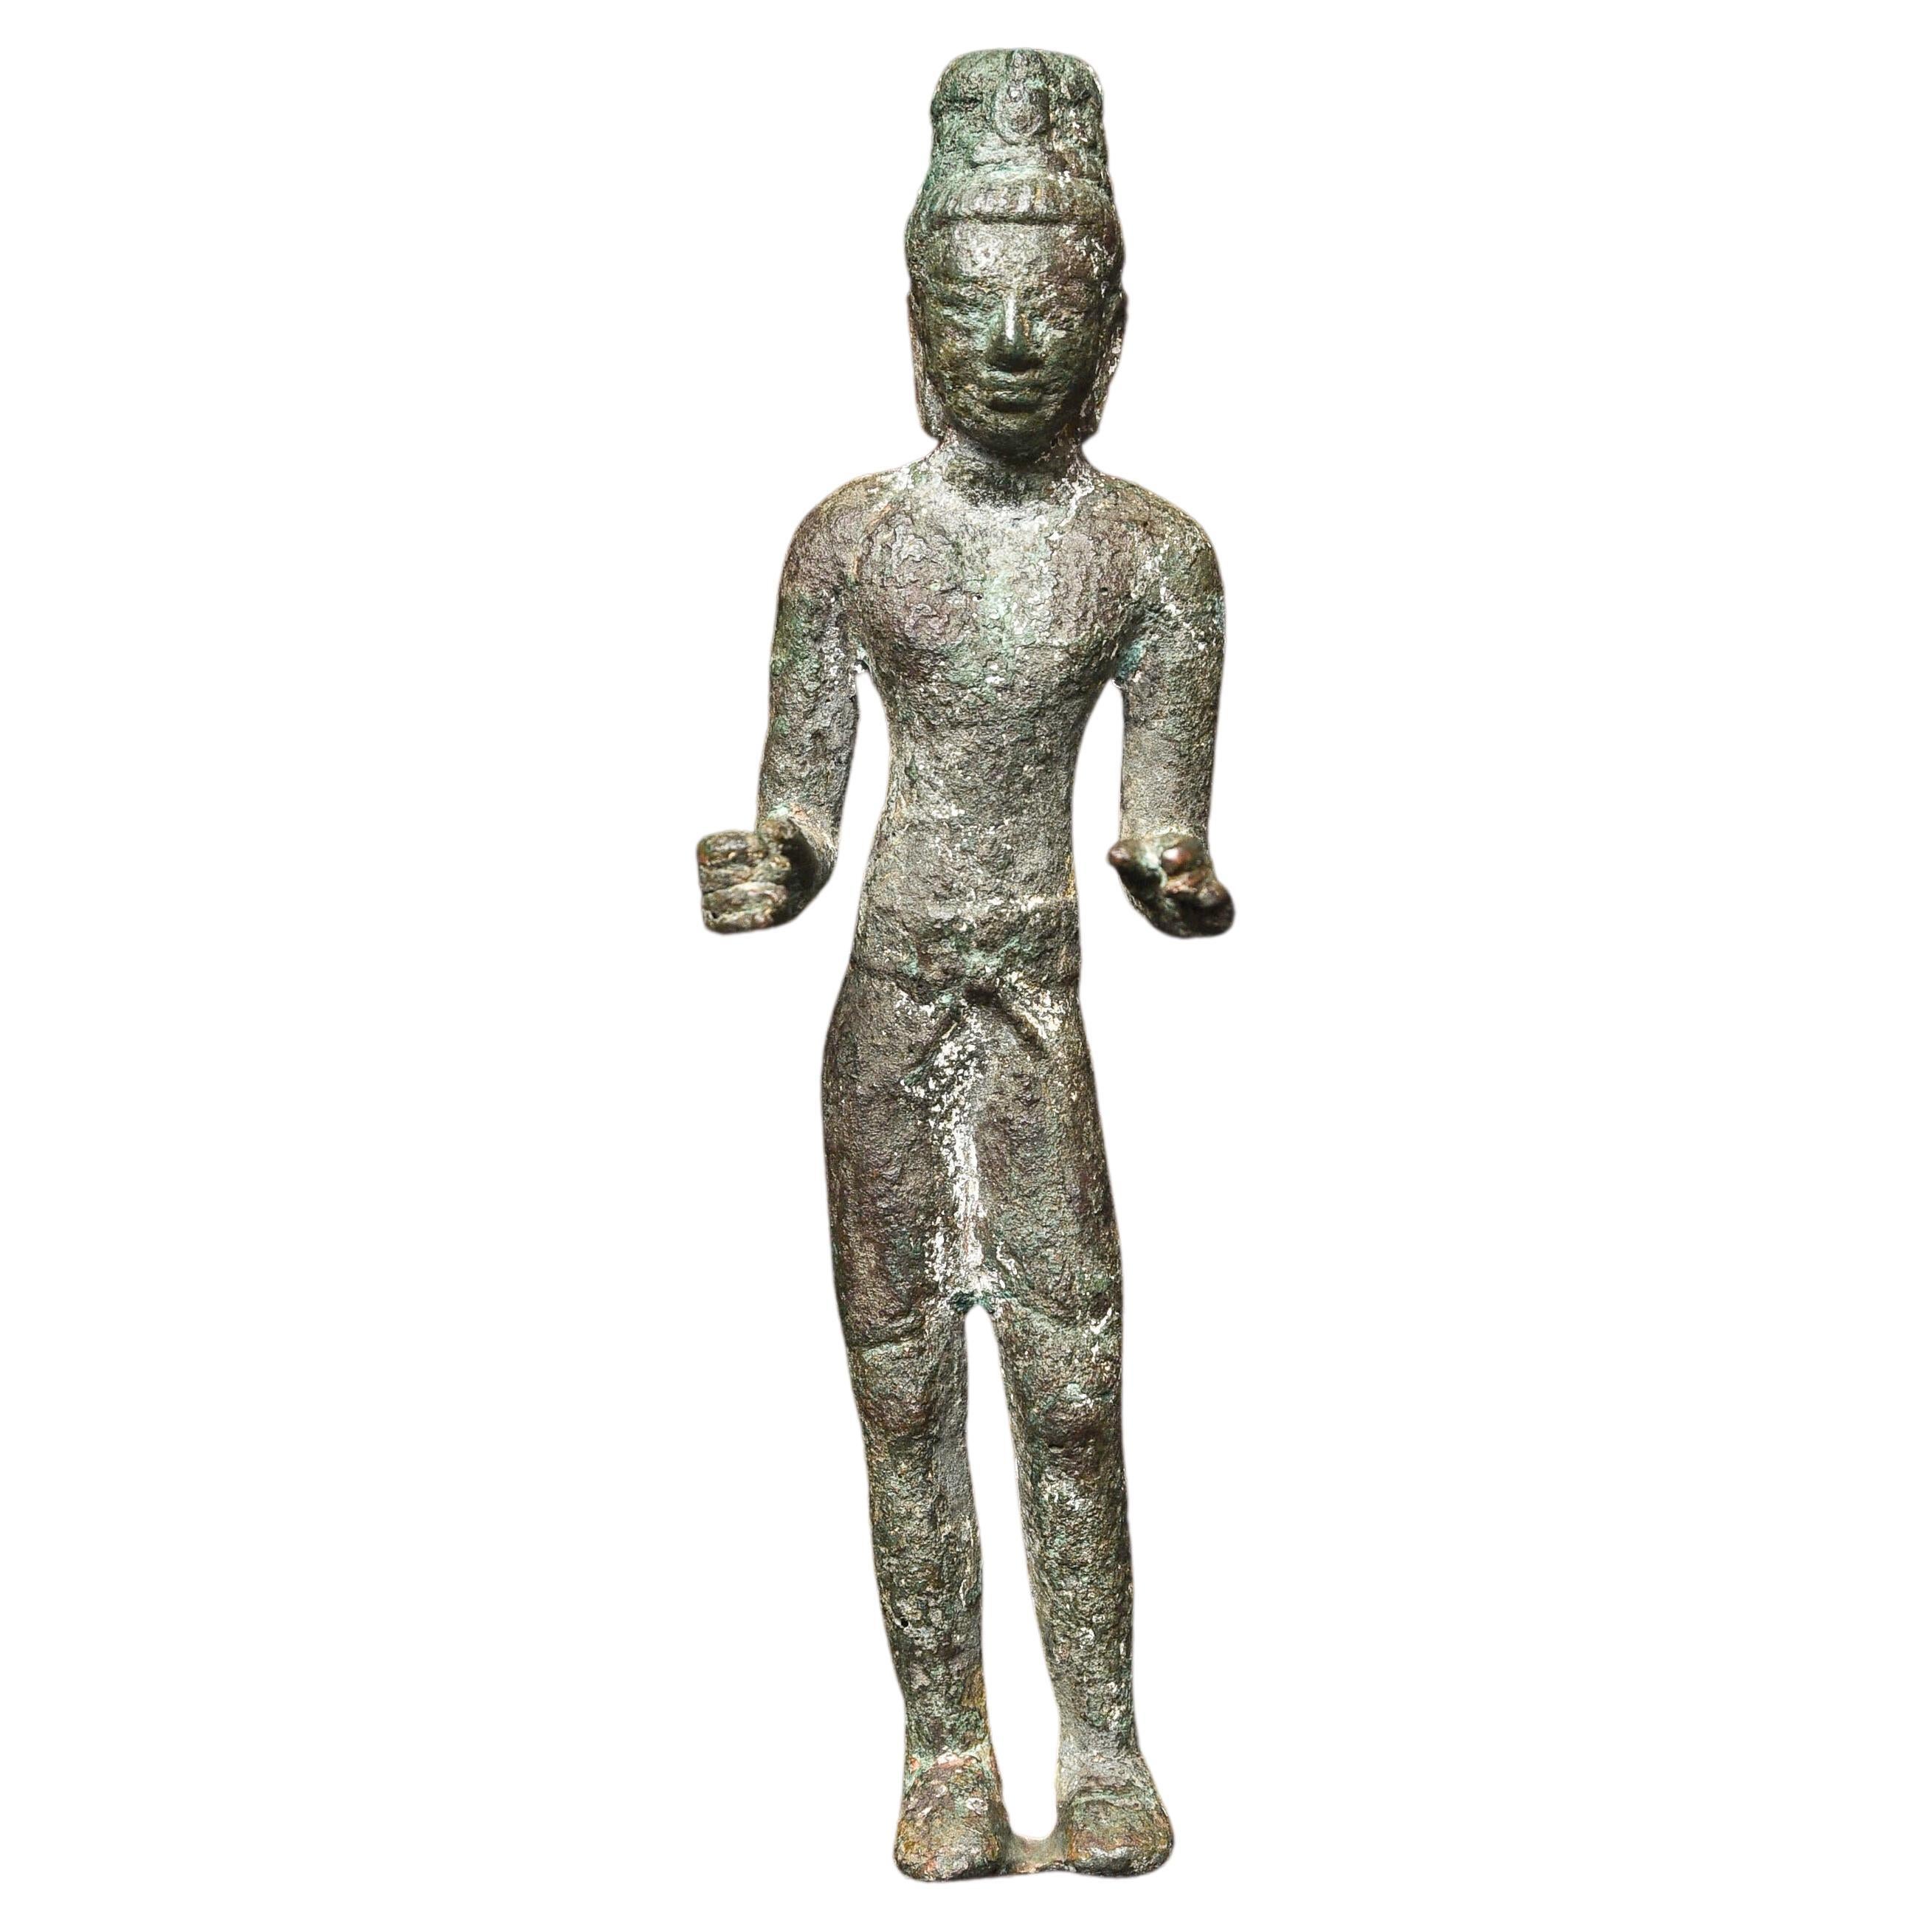 7th/9thC Solid-Cast Bronze Prakhon Chai Buddha or Bodhisattva - 9688 For Sale